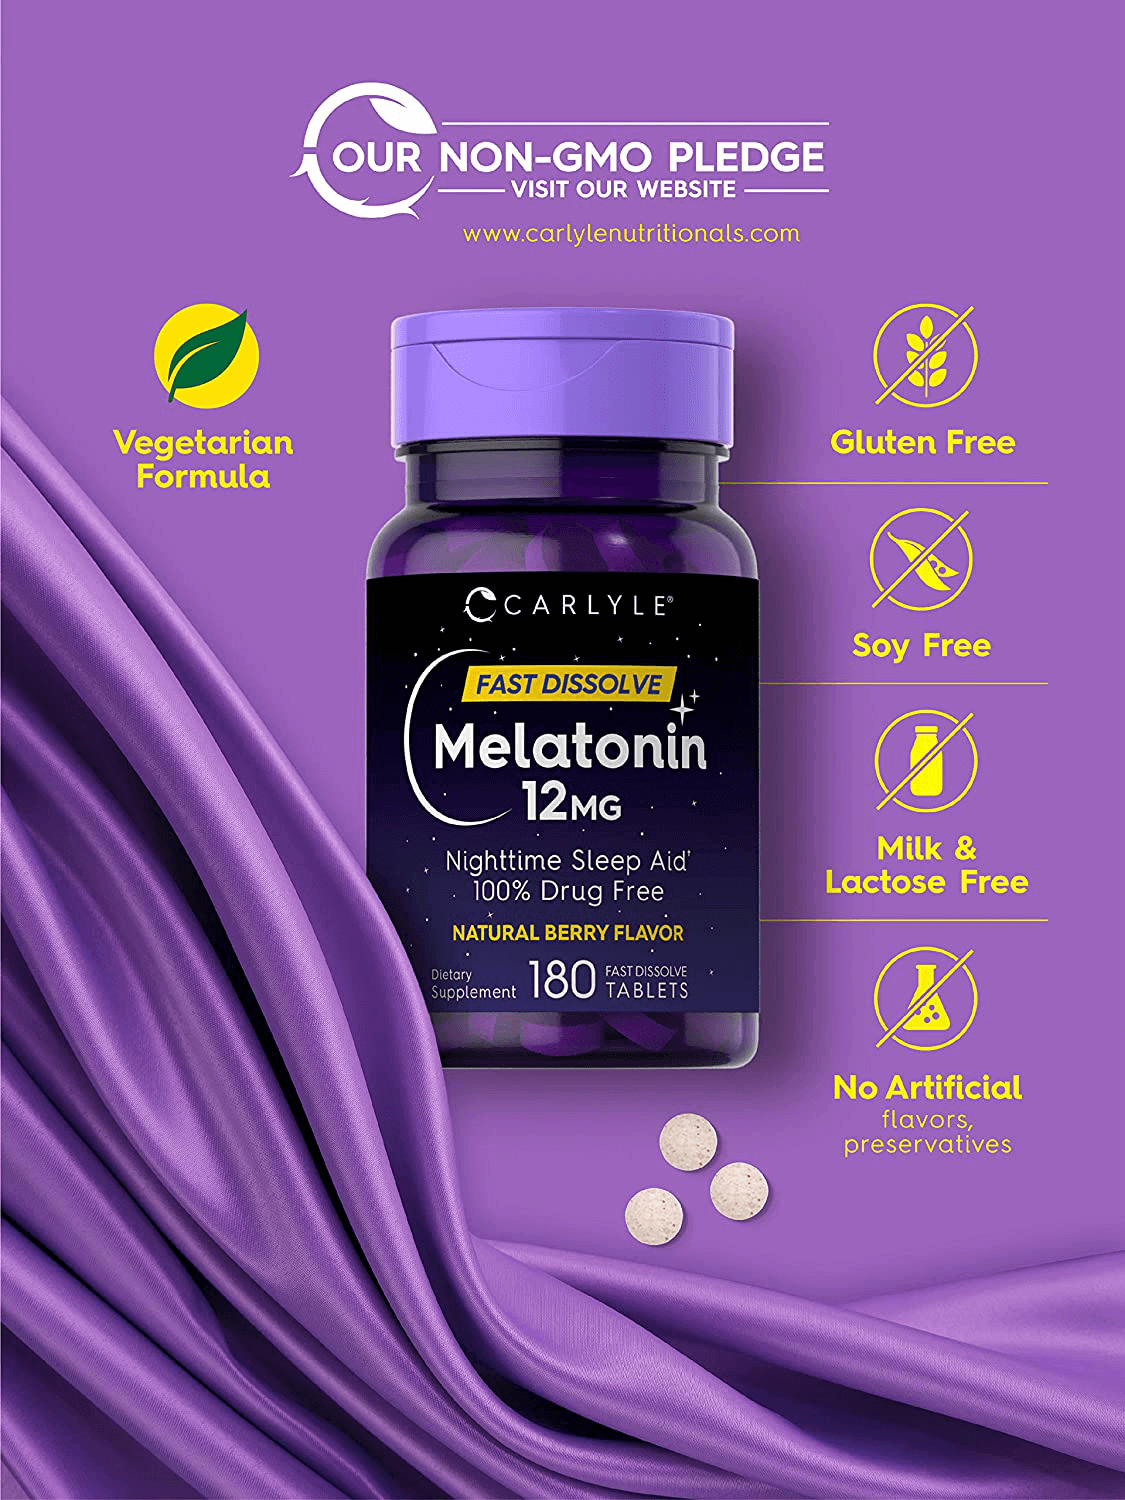 Carlyle Melatonin 12 mg Fast Dissolve 180 Tablets | Nighttime Sleep Aid | Natural Berry Flavor | Vegetarian, Non-GMO, Gluten Free - vitamenstore.com